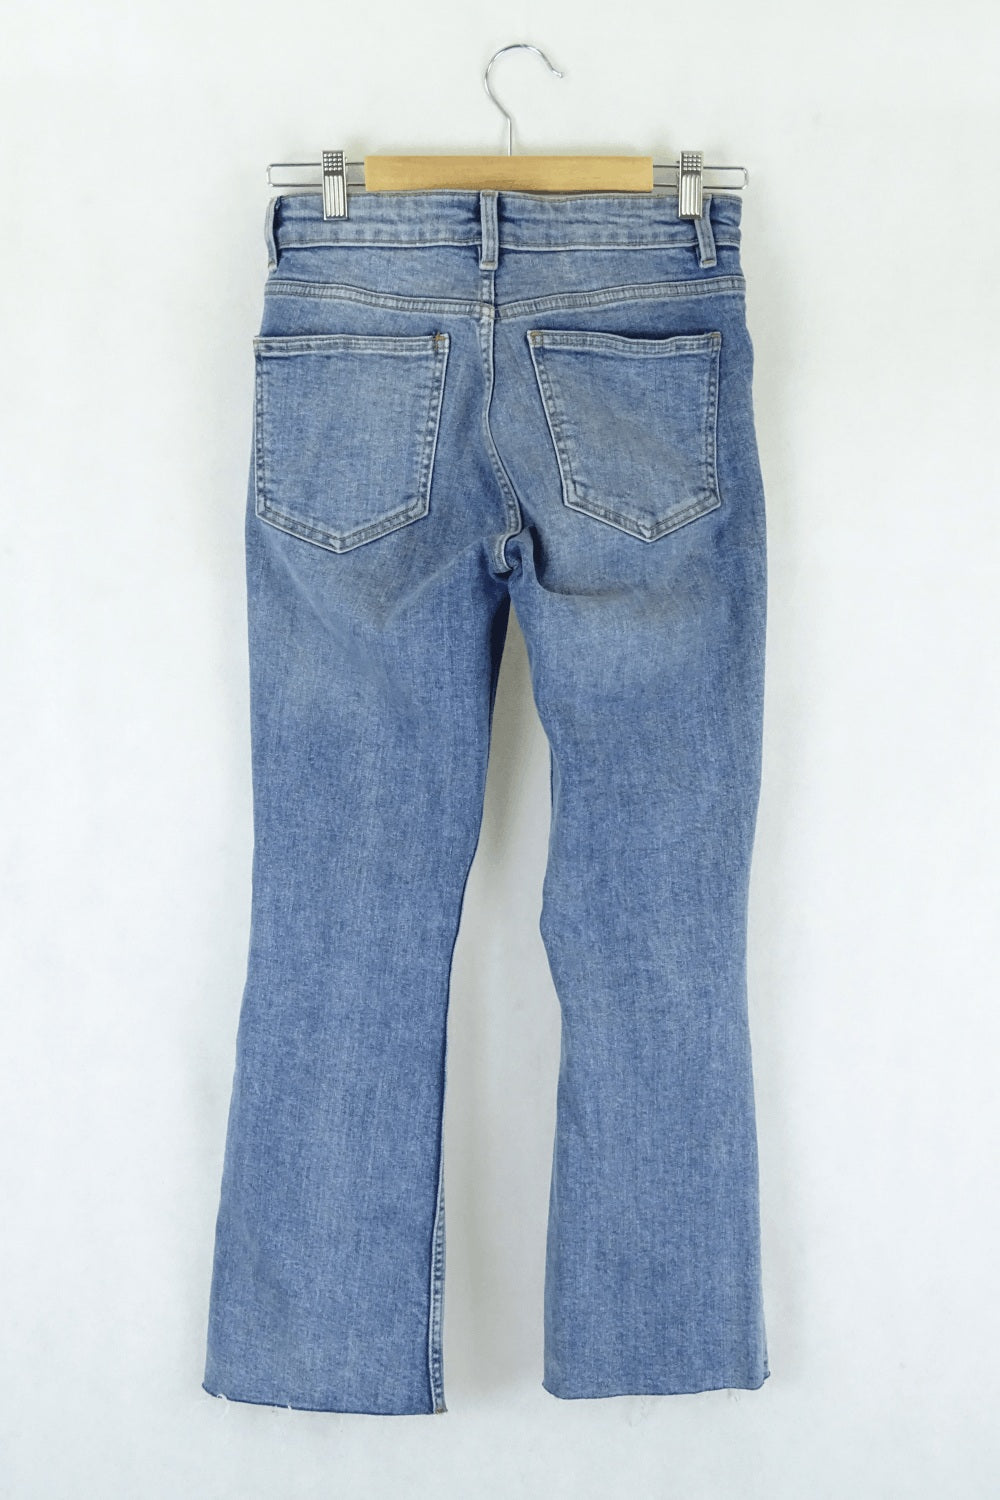 Zara Blue Pants XS - Reluv Clothing Australia